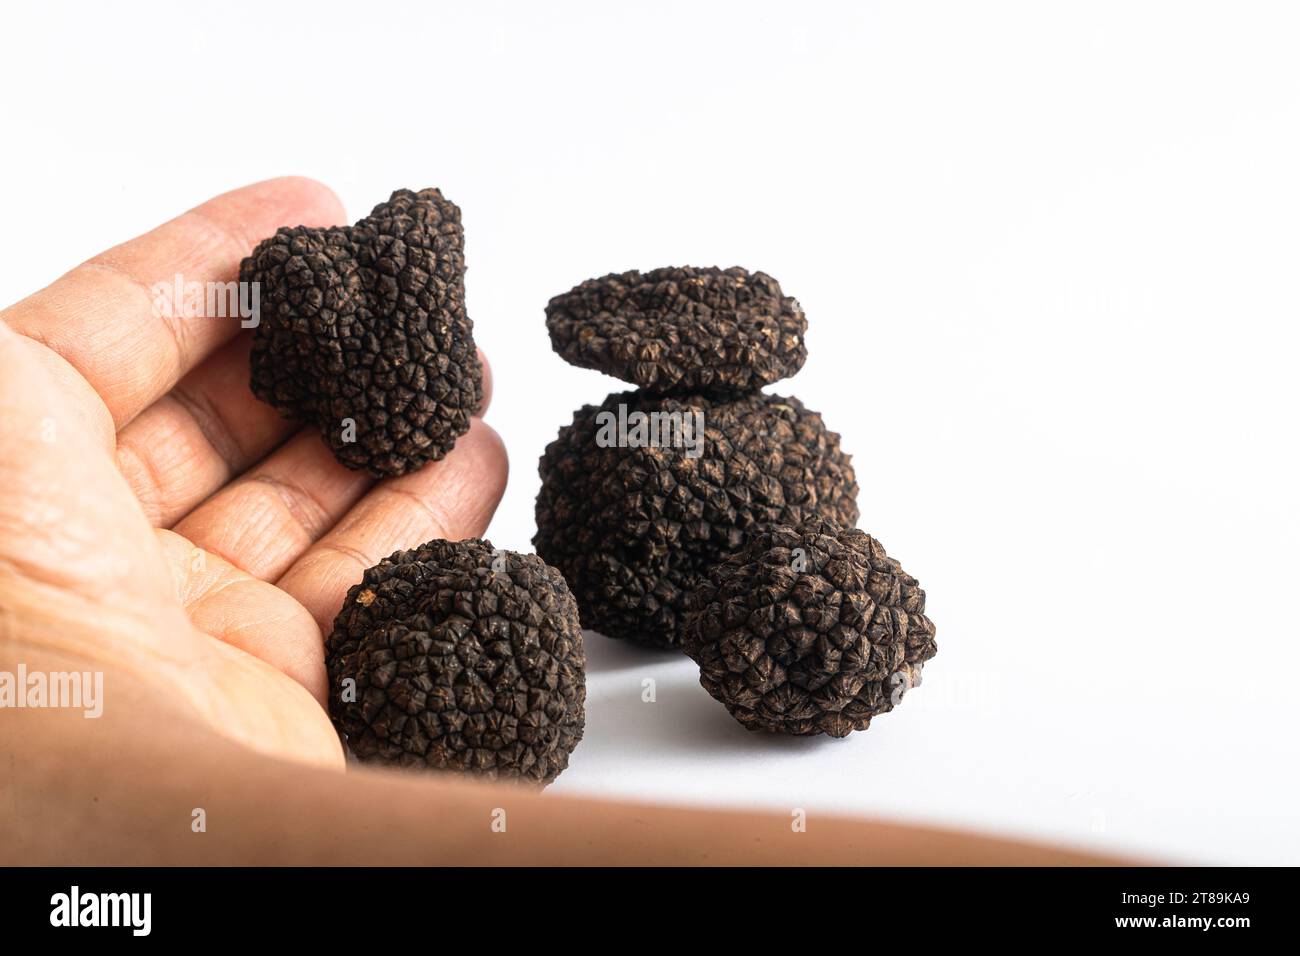 Exquisite Black Truffle Mushroom Grasped in Hand on White Background – Culinary Elegance Stock Photo